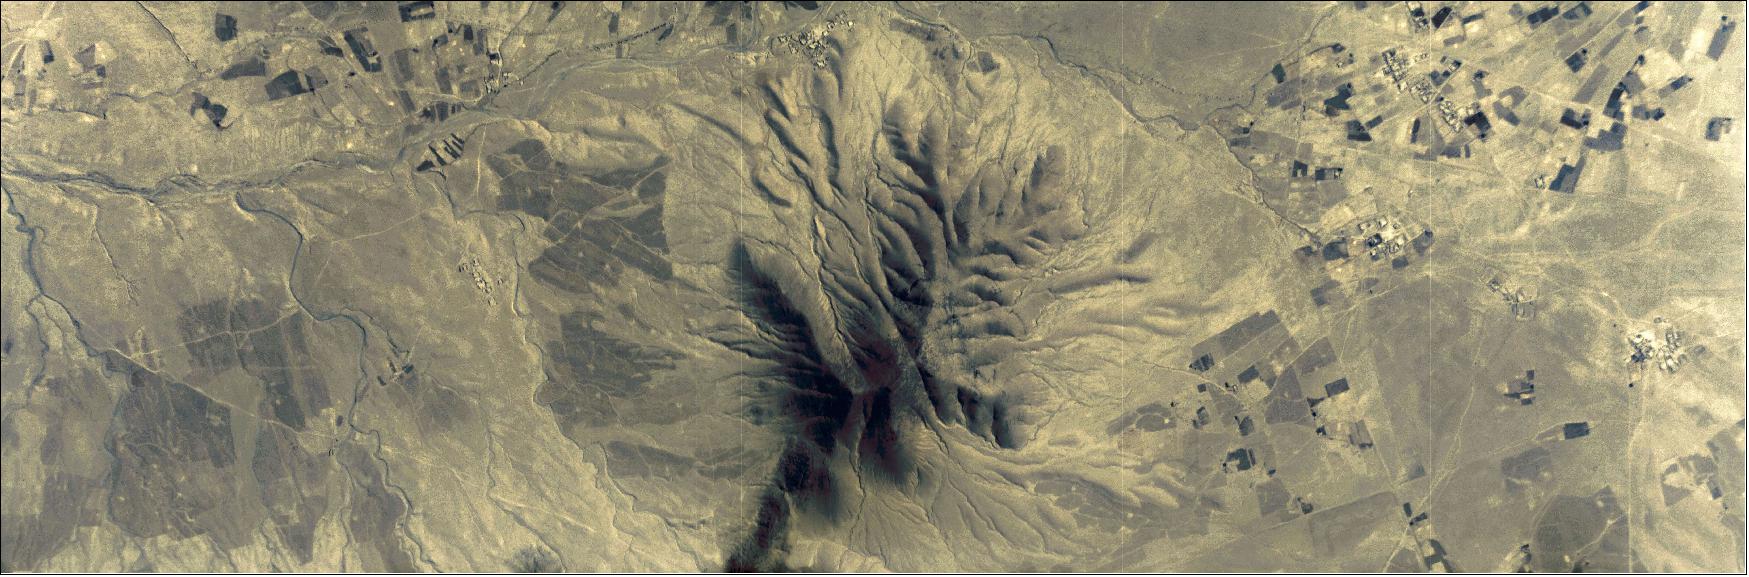 Figure 21: Desert mountain in China's Bayingolin Mongol Autonomous Prefecture (image credit: Spaceflight Industries, BlackSky)